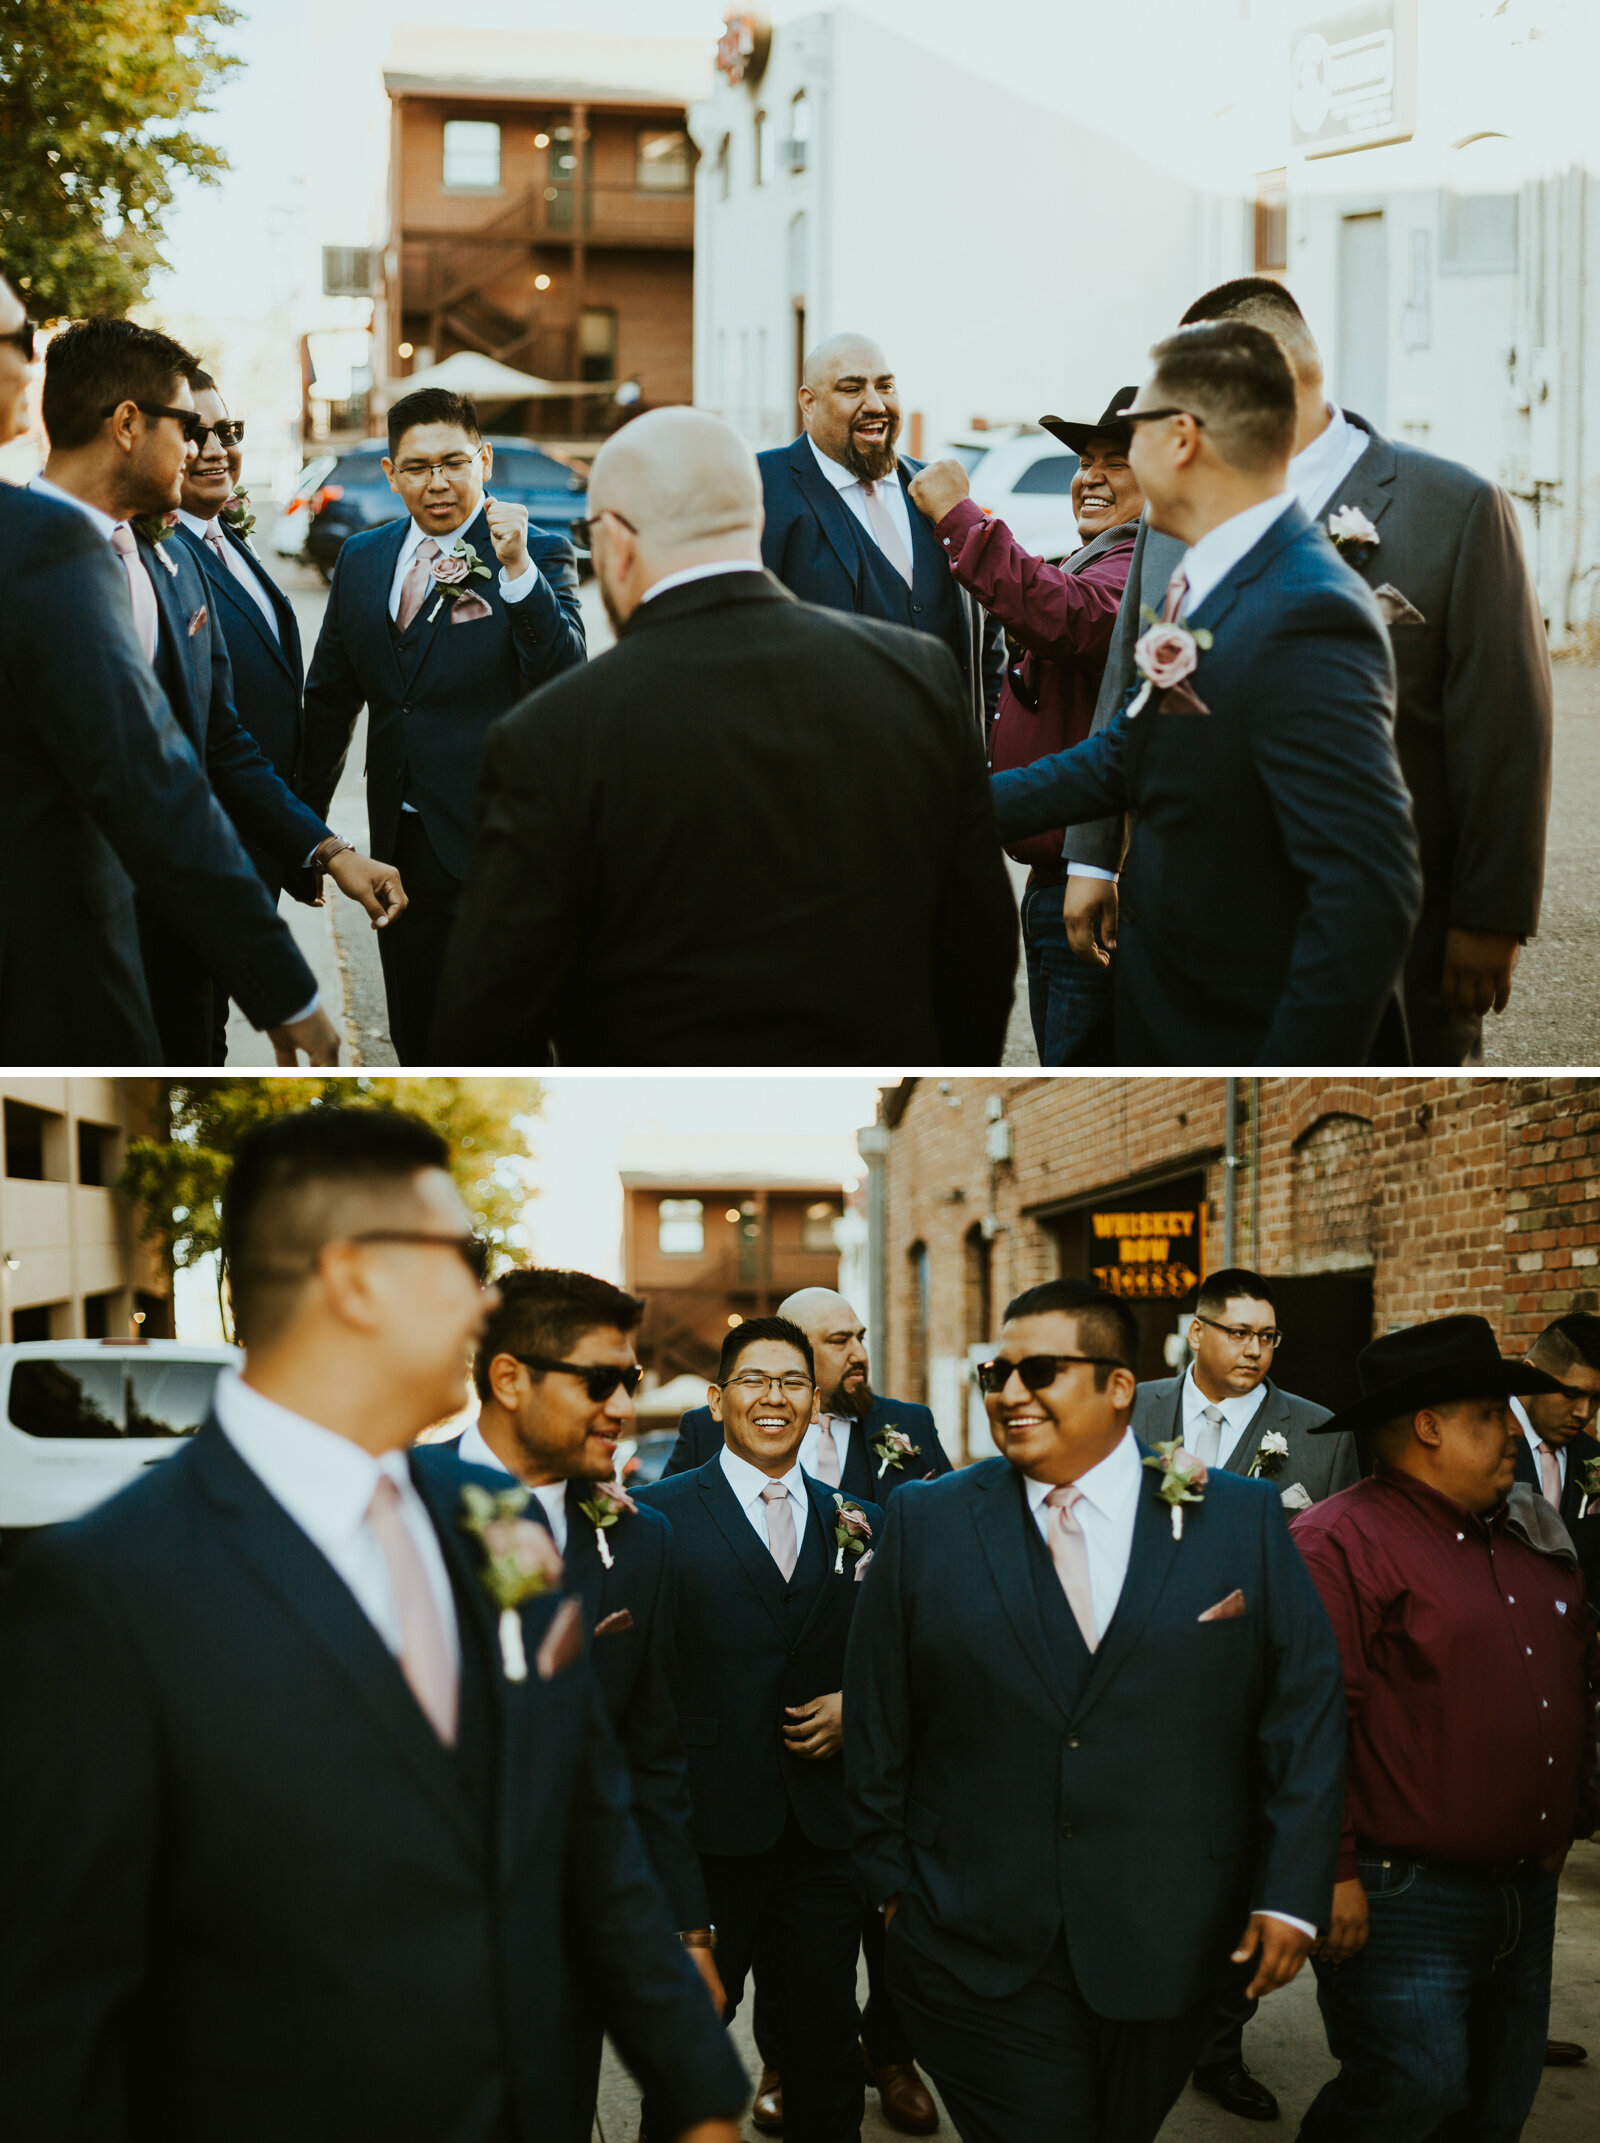 GRAND HIGHLAND HOTEL PRESCOTT ARIZONA WEDDING PHOTOGRAPHY CANDID GROOMSMEN.jpg